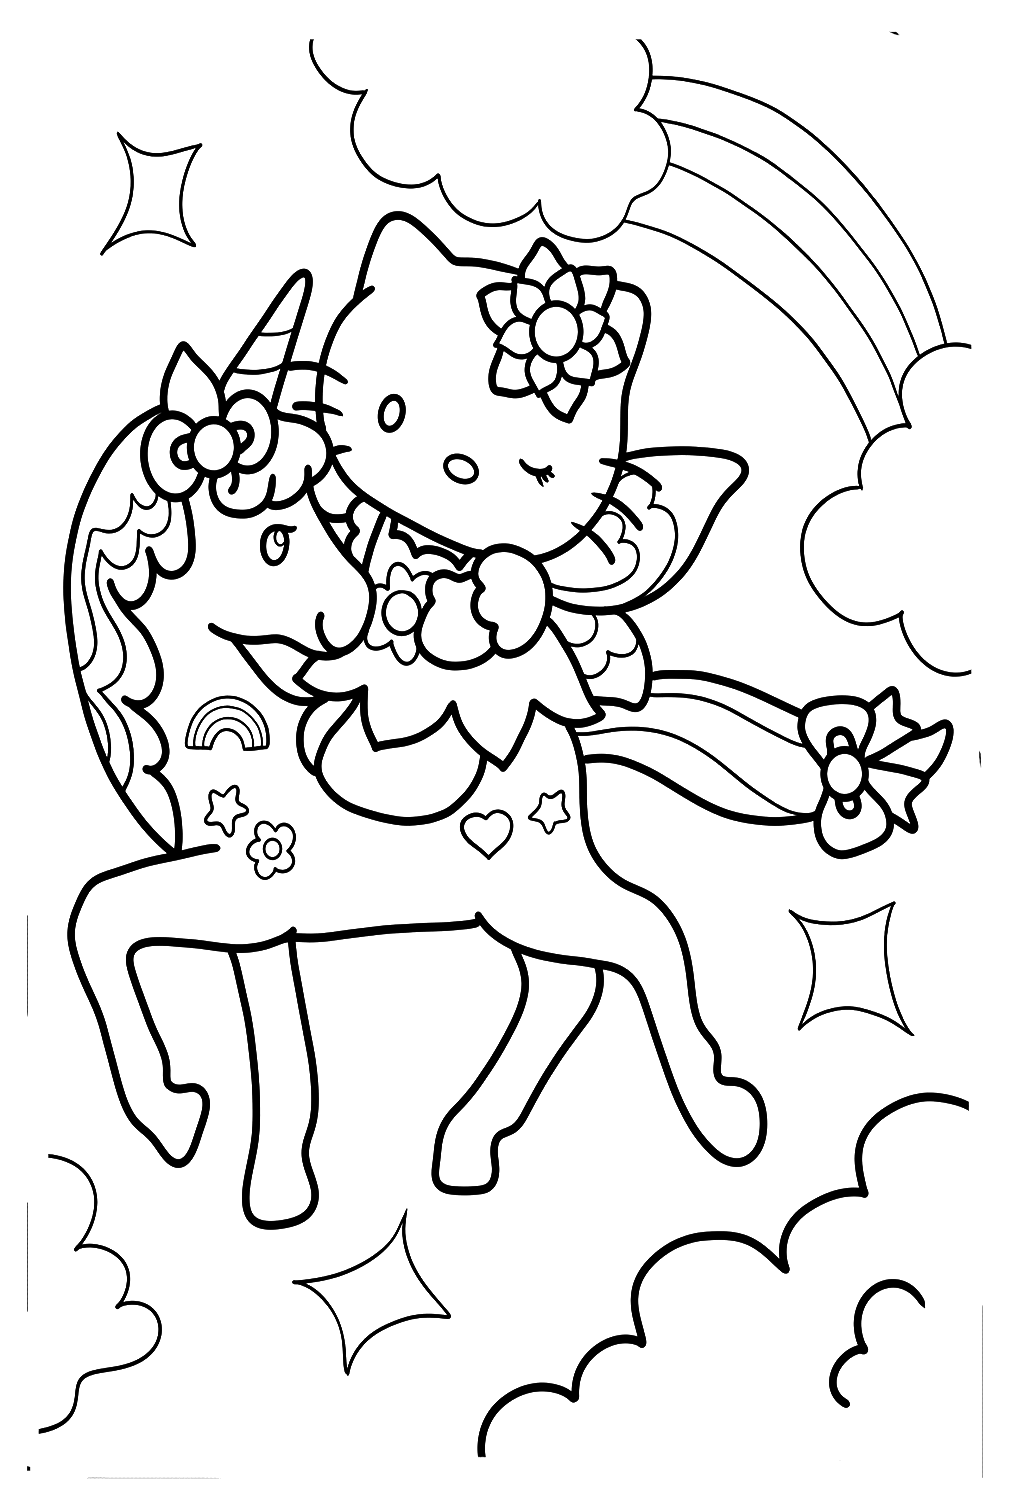 Desenho de kitty unicorn para colorir